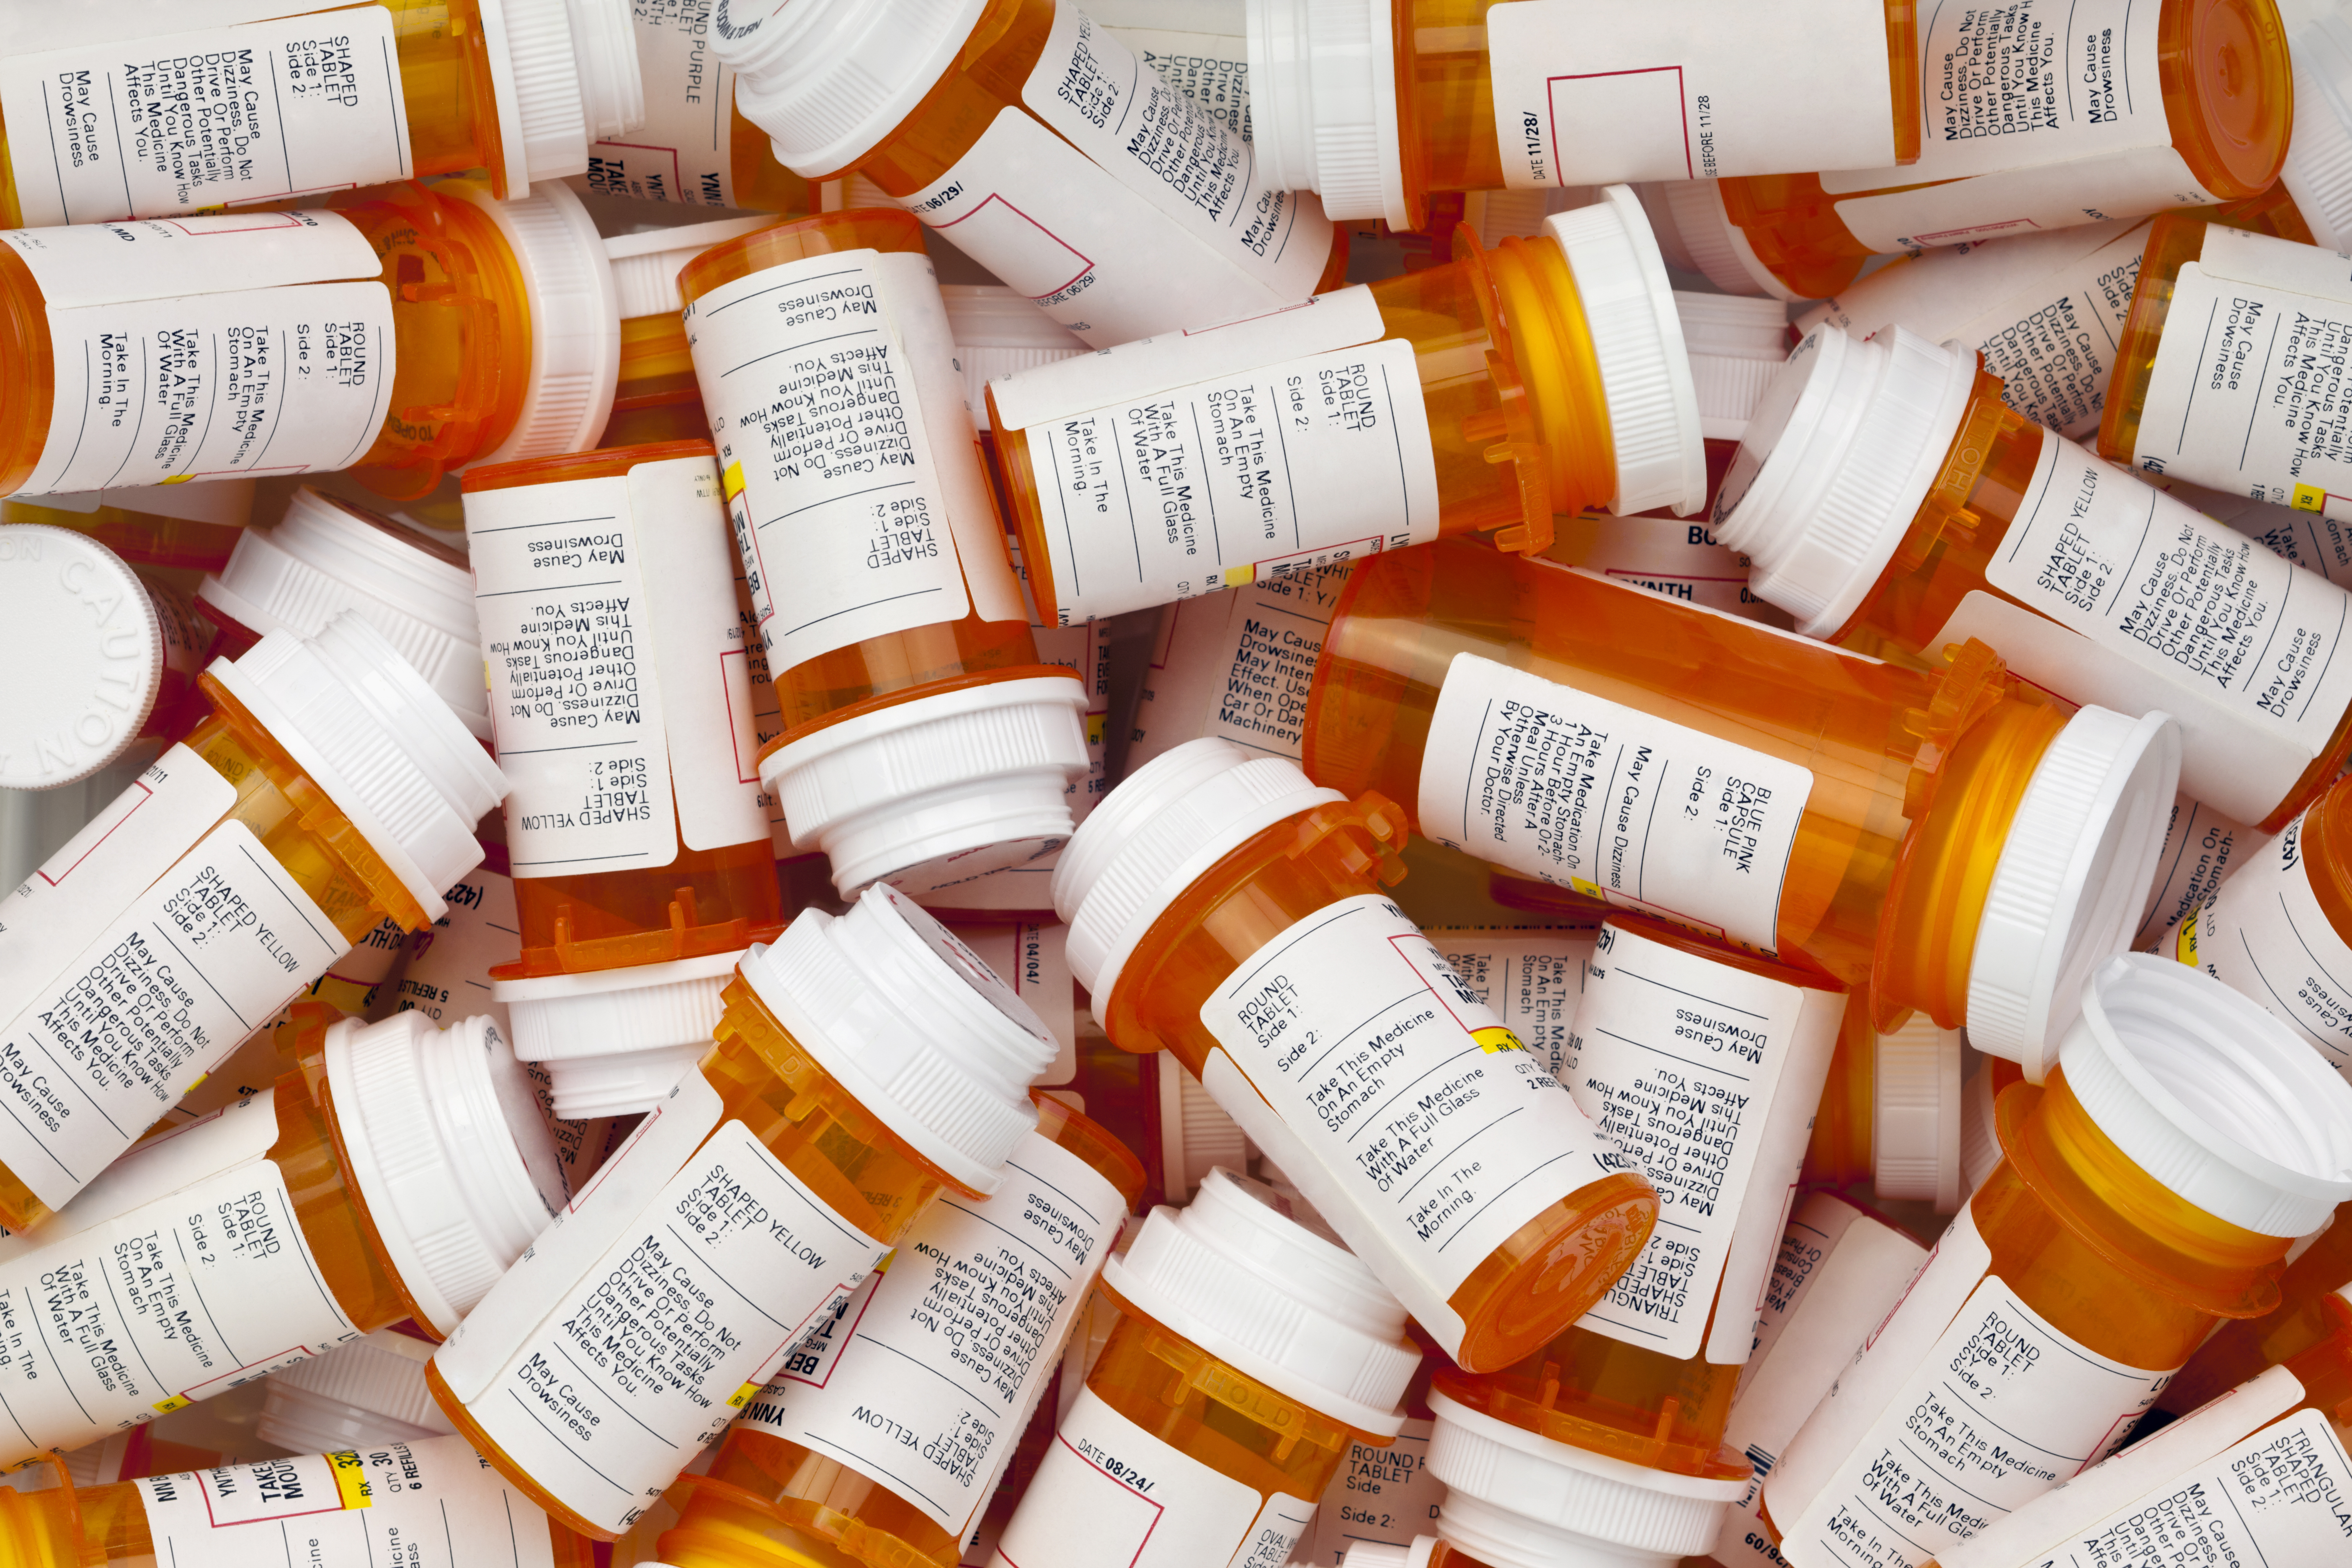 Prescription bottles are in a jumble. Shutterstock image via David Smart